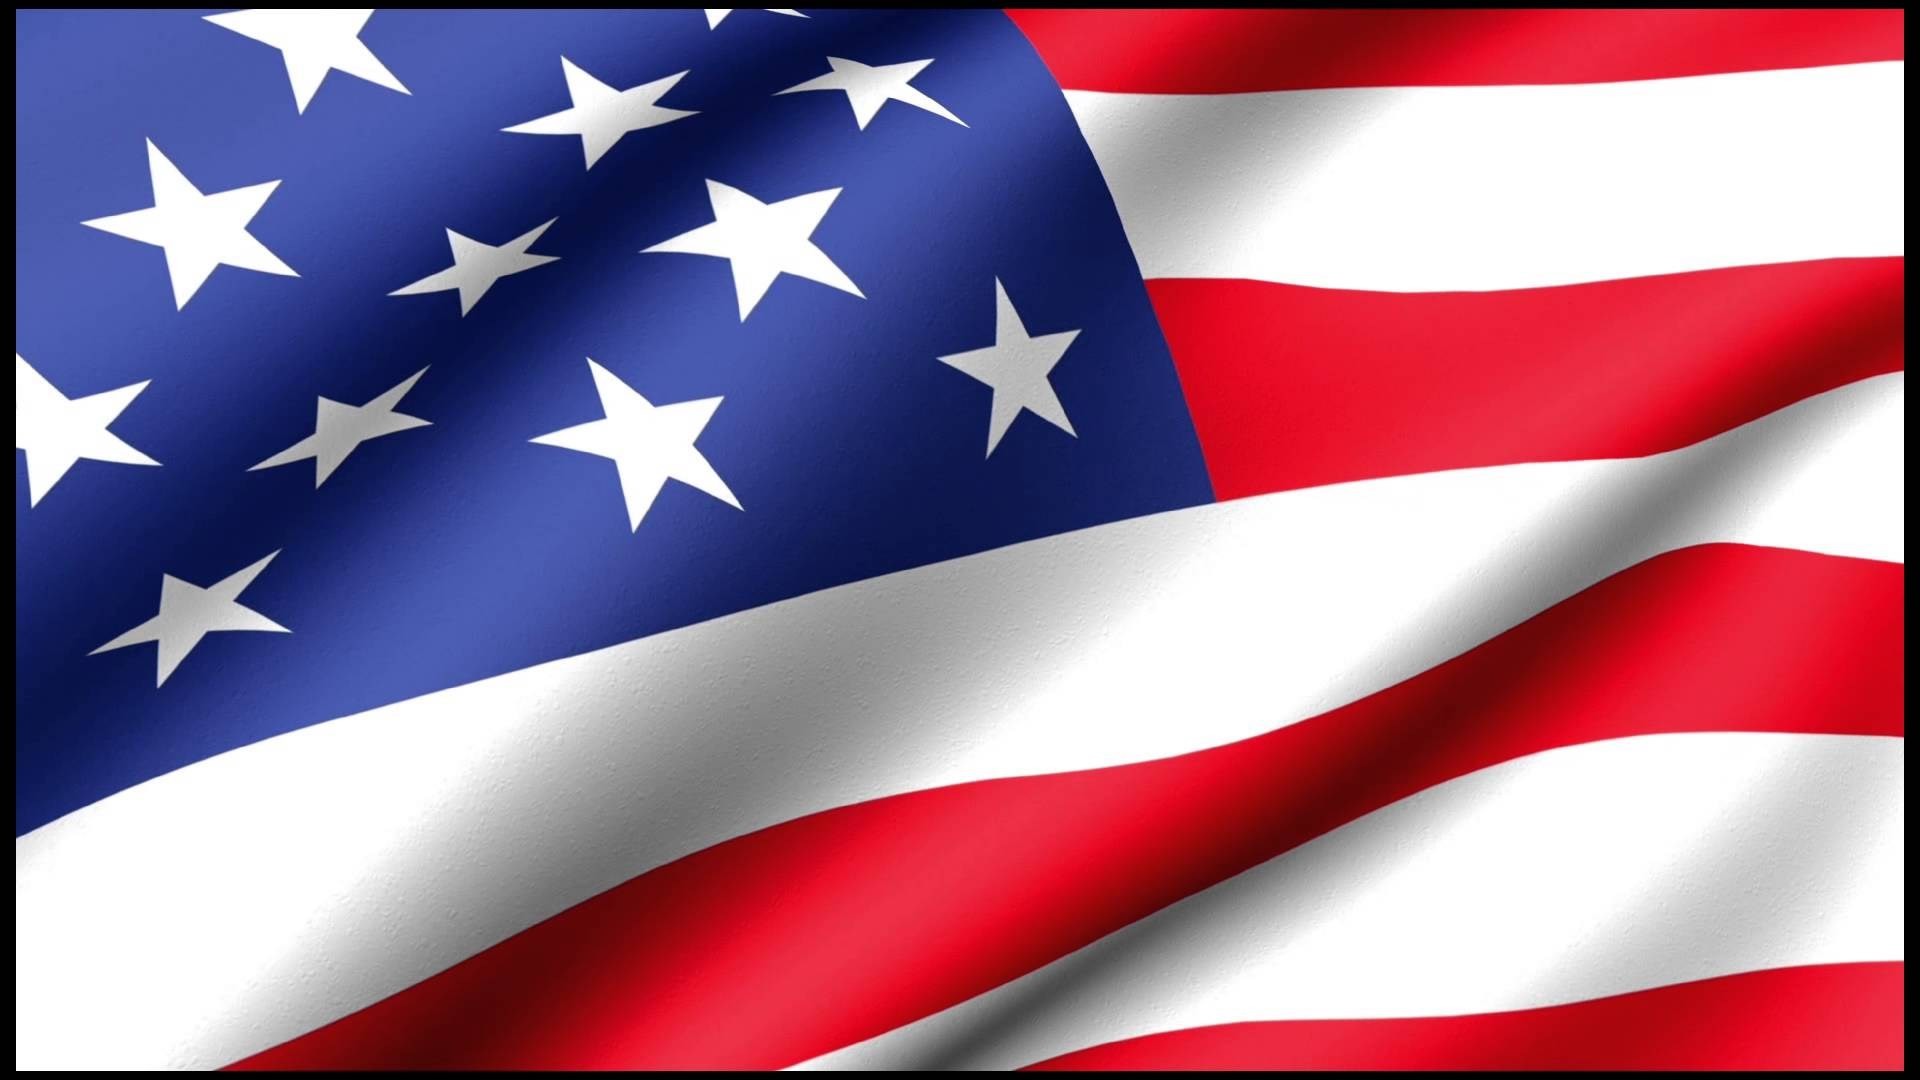 American flag wallpaper free desktop wallpapers